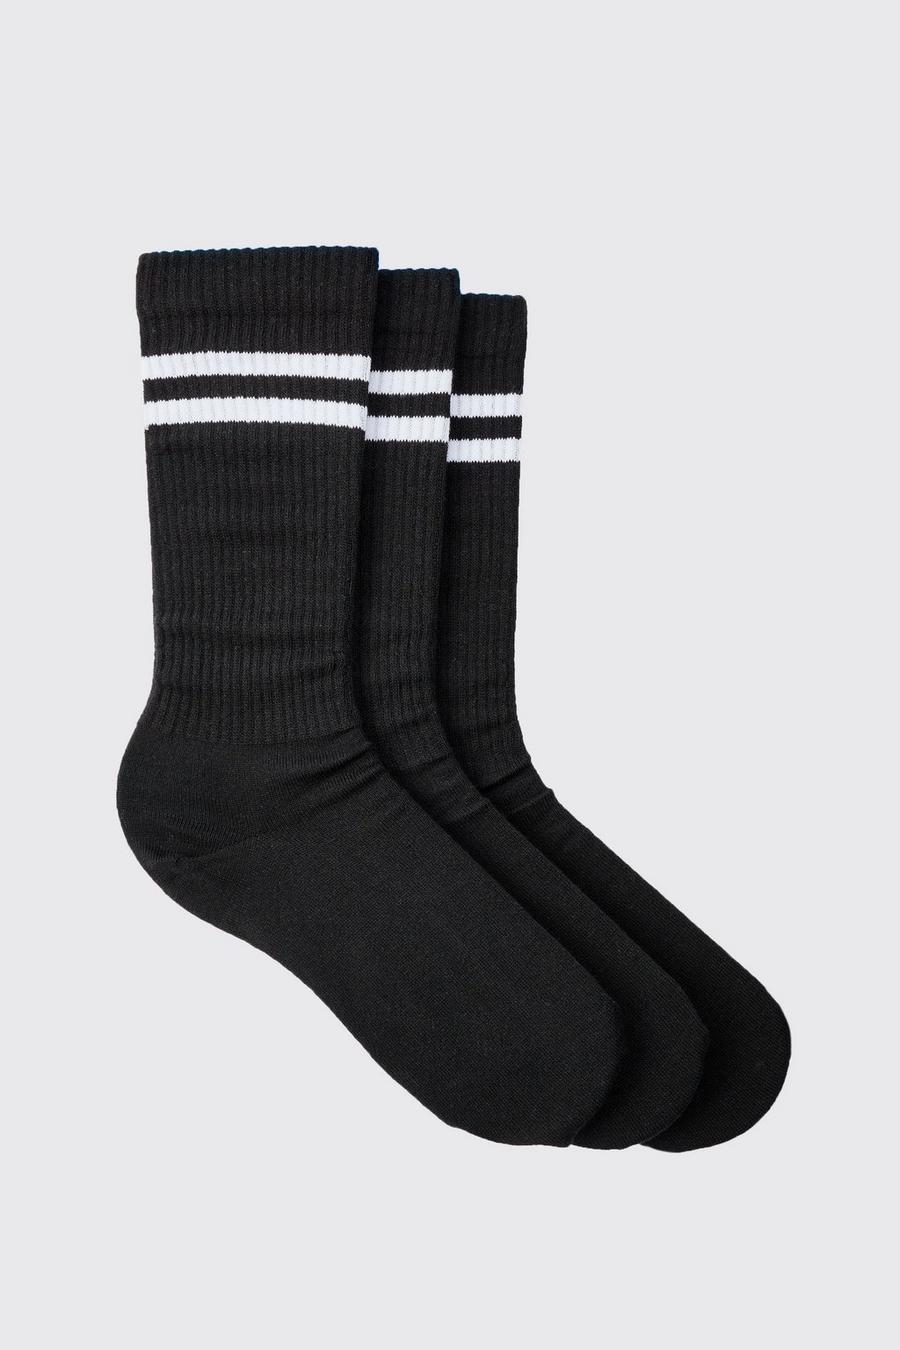 Black 3 Pack Sport Stripe Socks